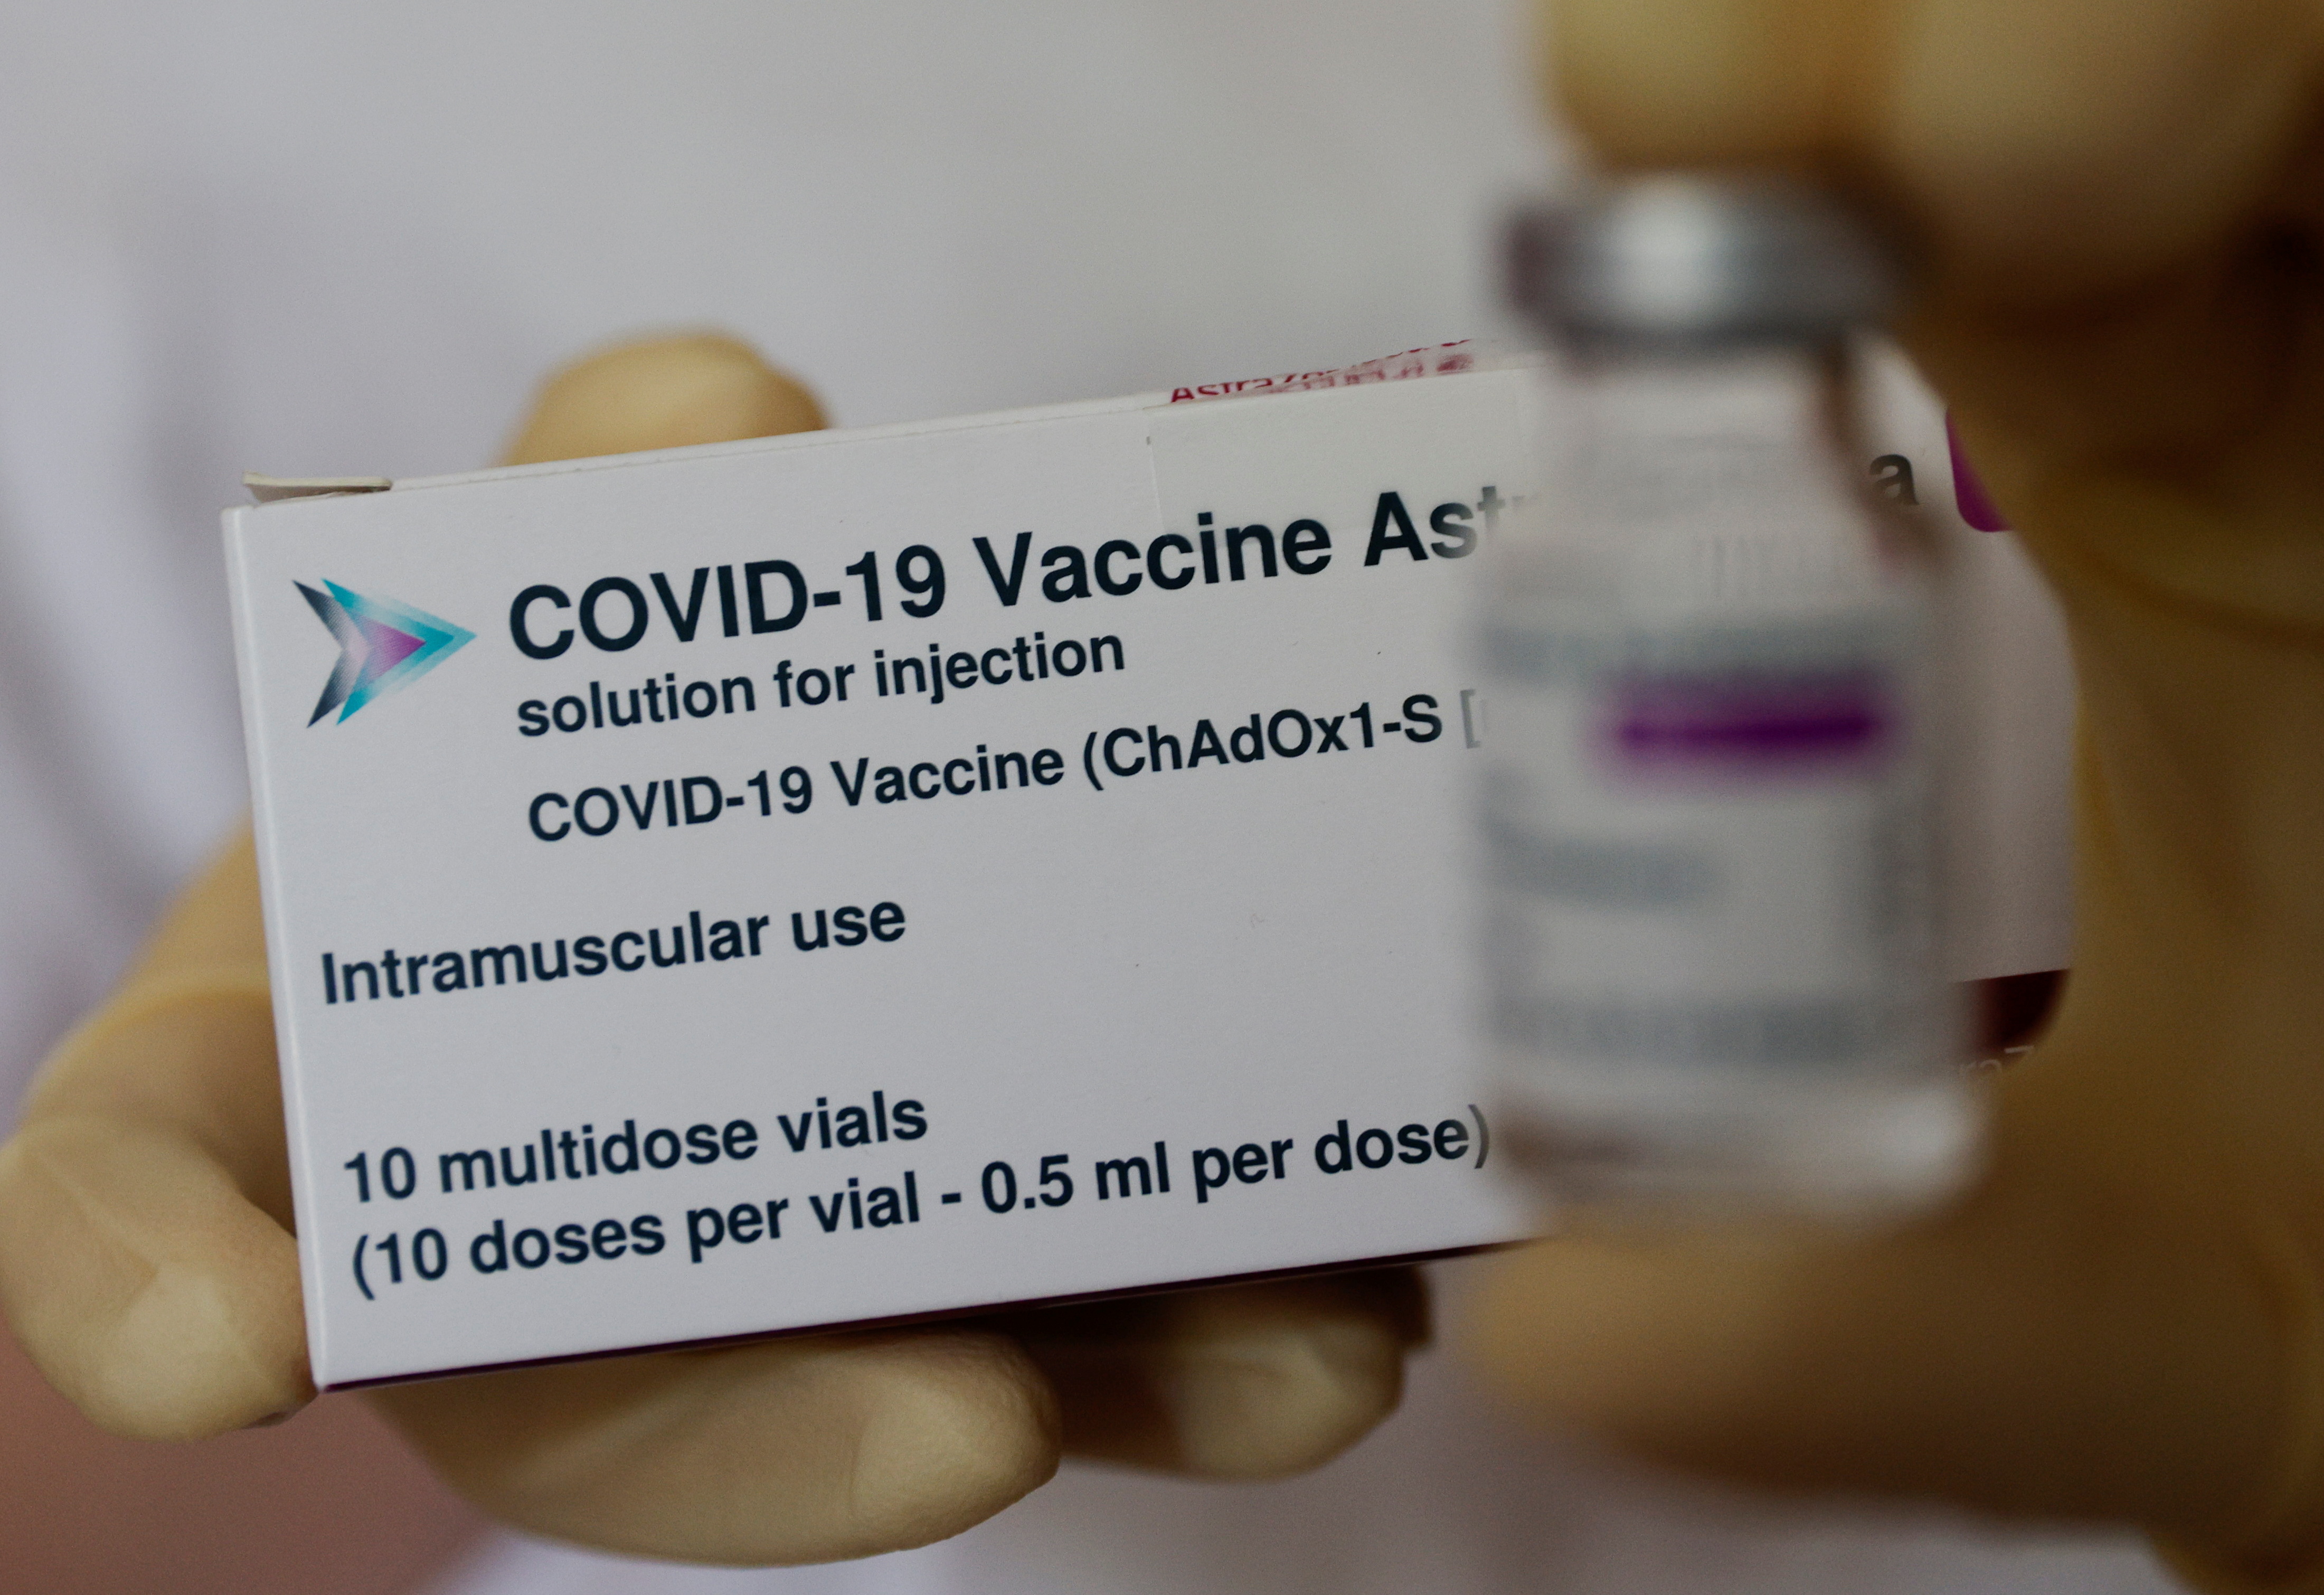 Blood az clot vaccine Second dose